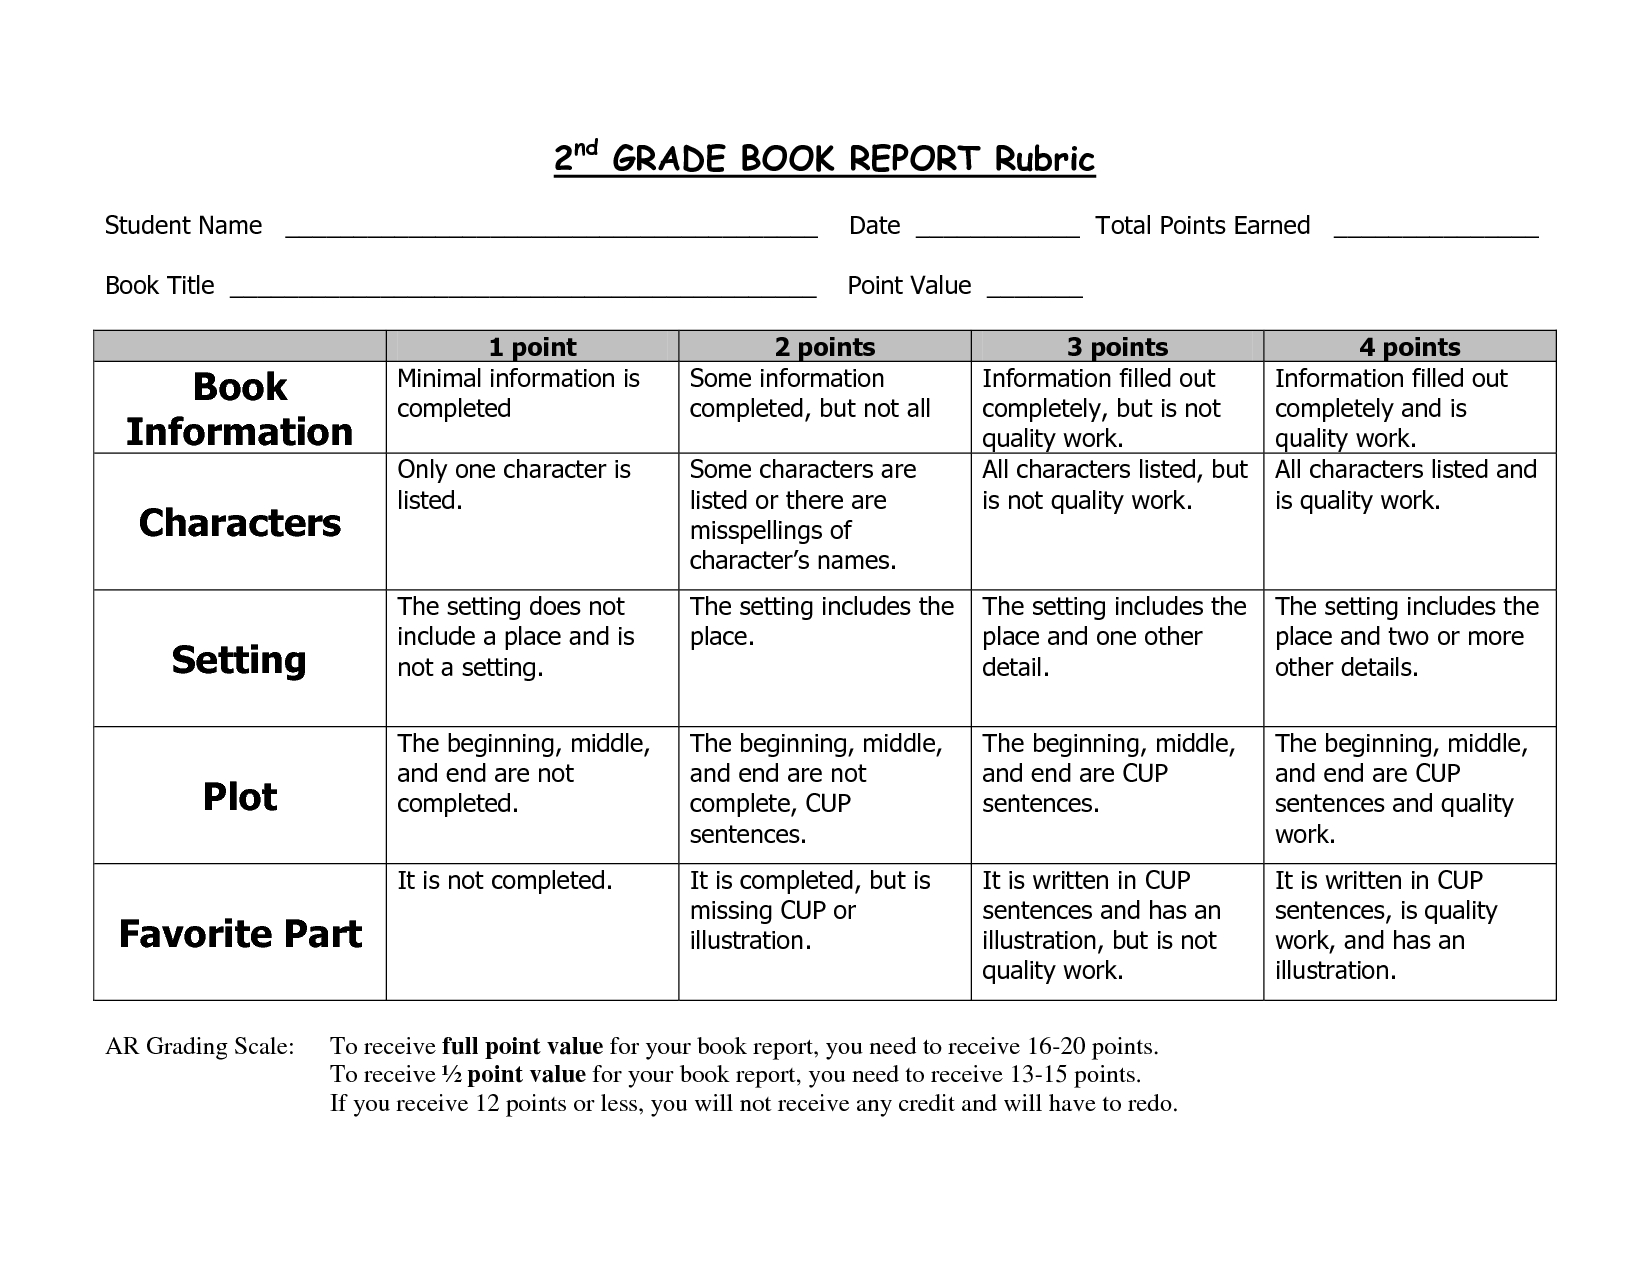 2Nd Grade Book Report Sample | School Stuff | 2Nd Grade Regarding Second Grade Book Report Template